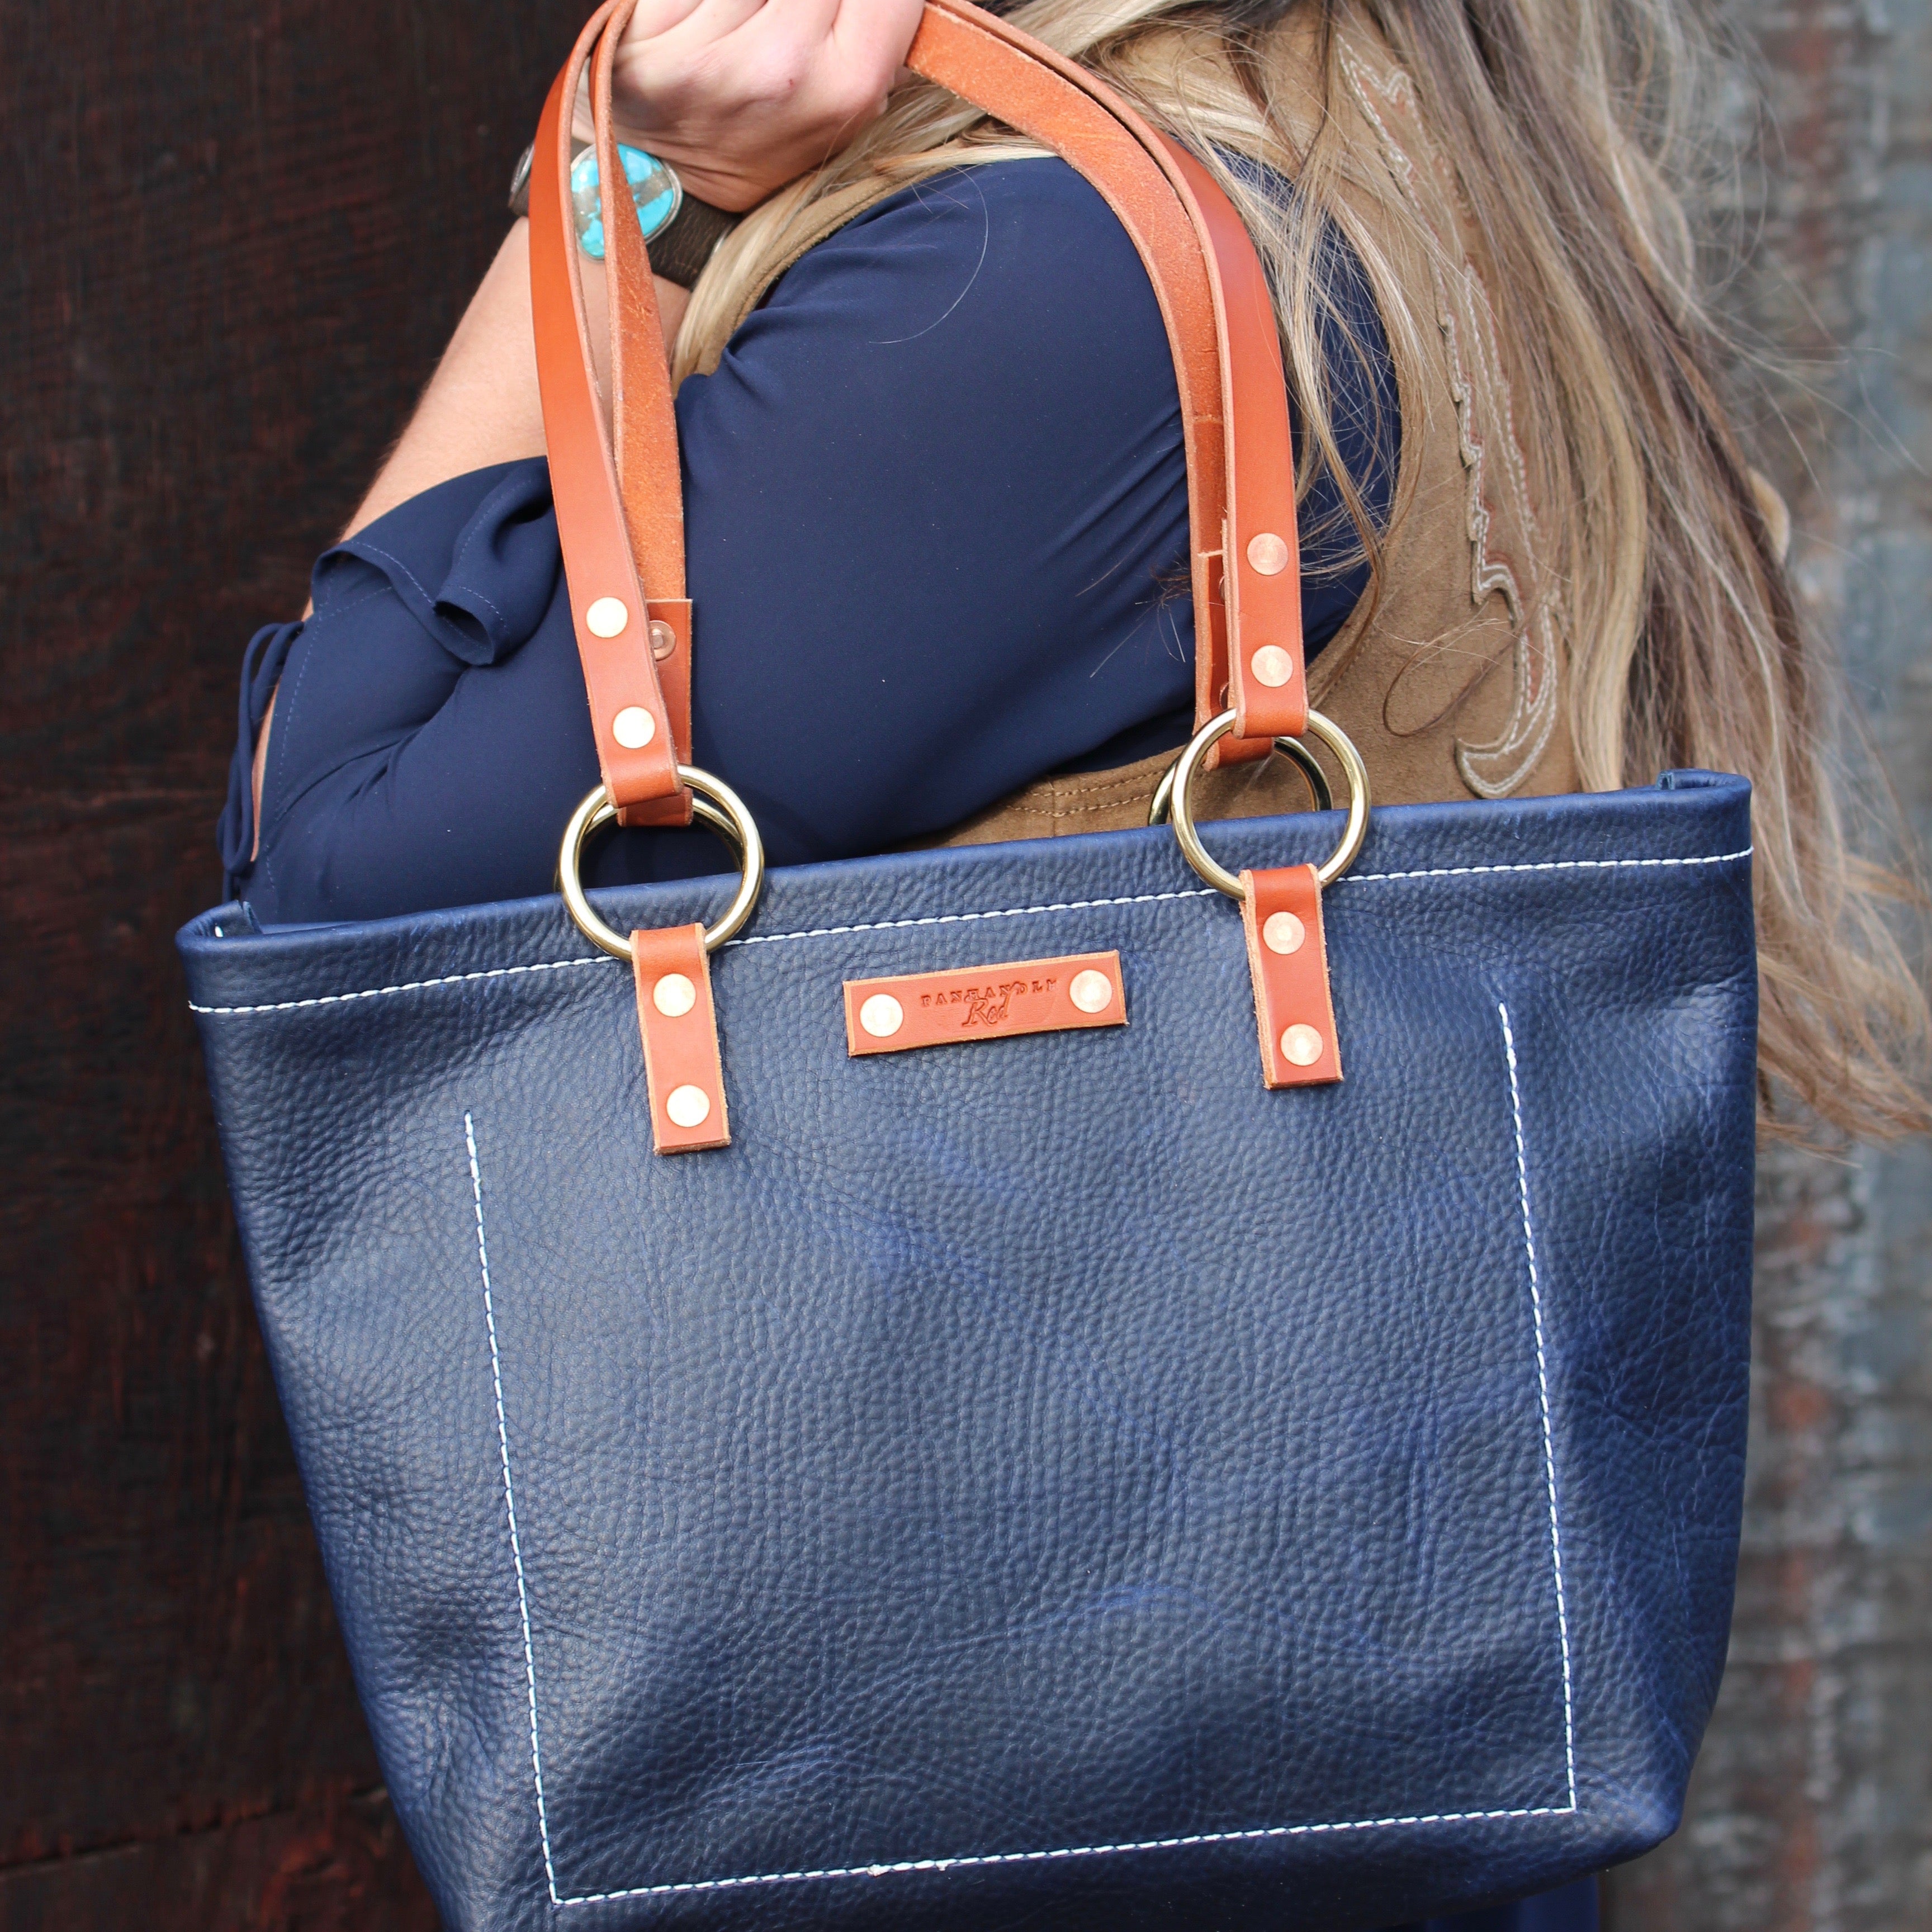 Gucci Metallic Navy Blue Leather Galaxy Top Handle Bag